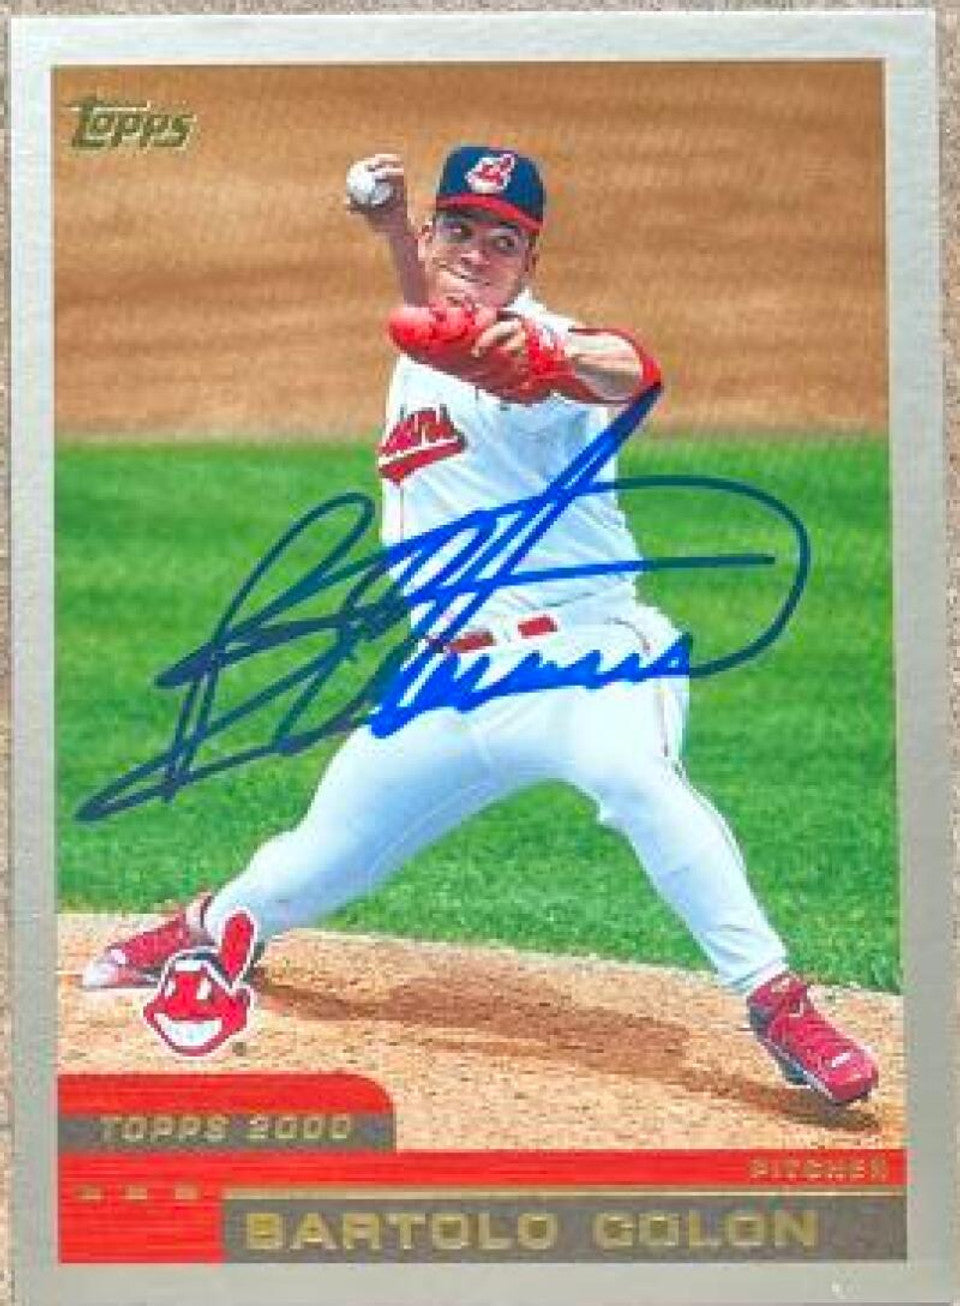 Bartolo Colon Signed 2000 Topps Baseball Card - Cleveland Indians